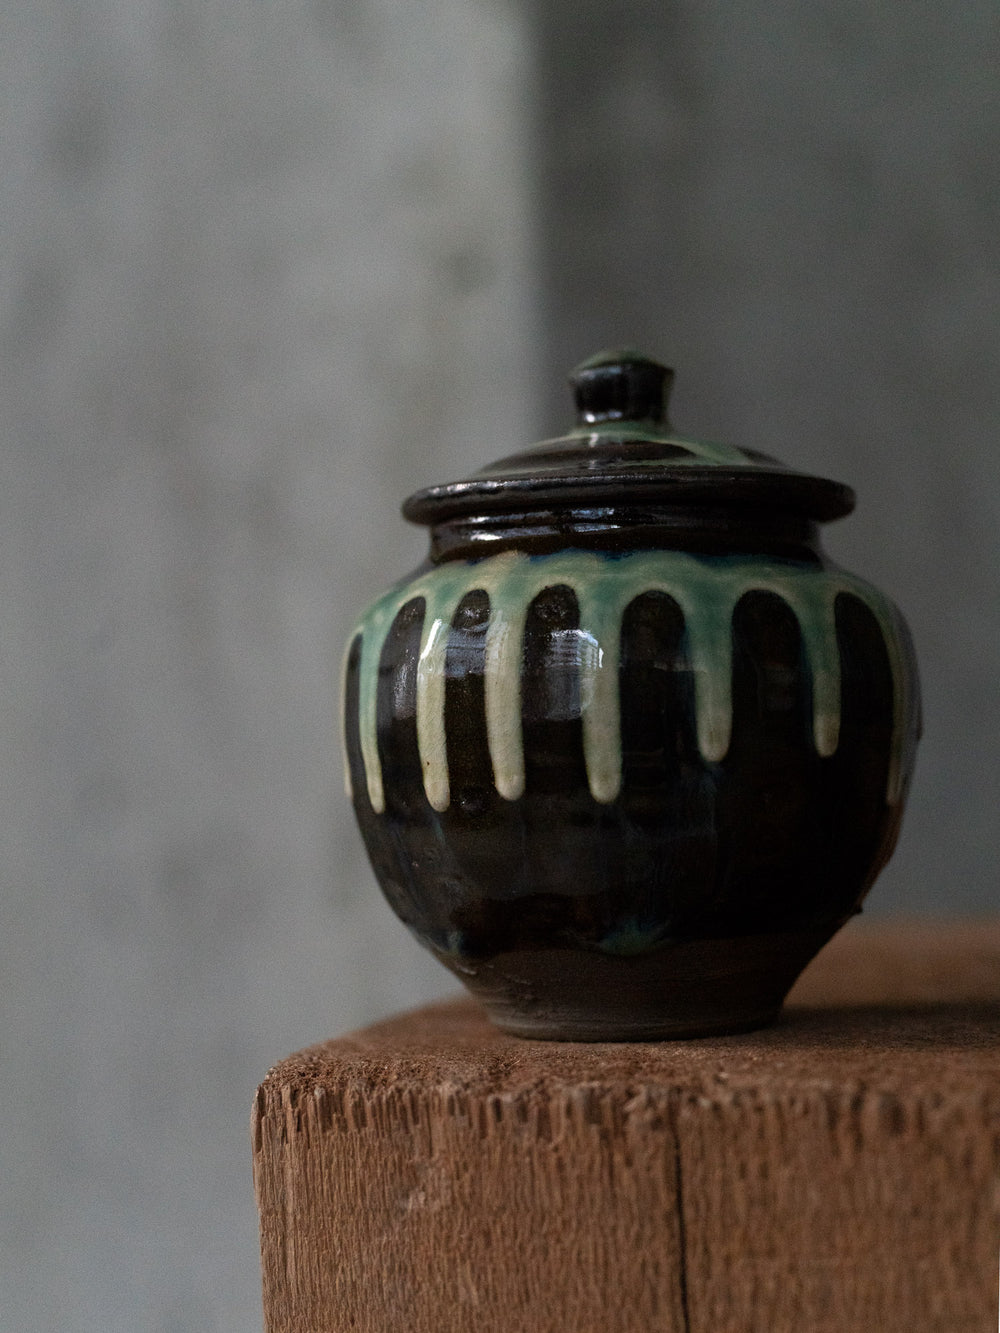 Koishiwara Small Pot